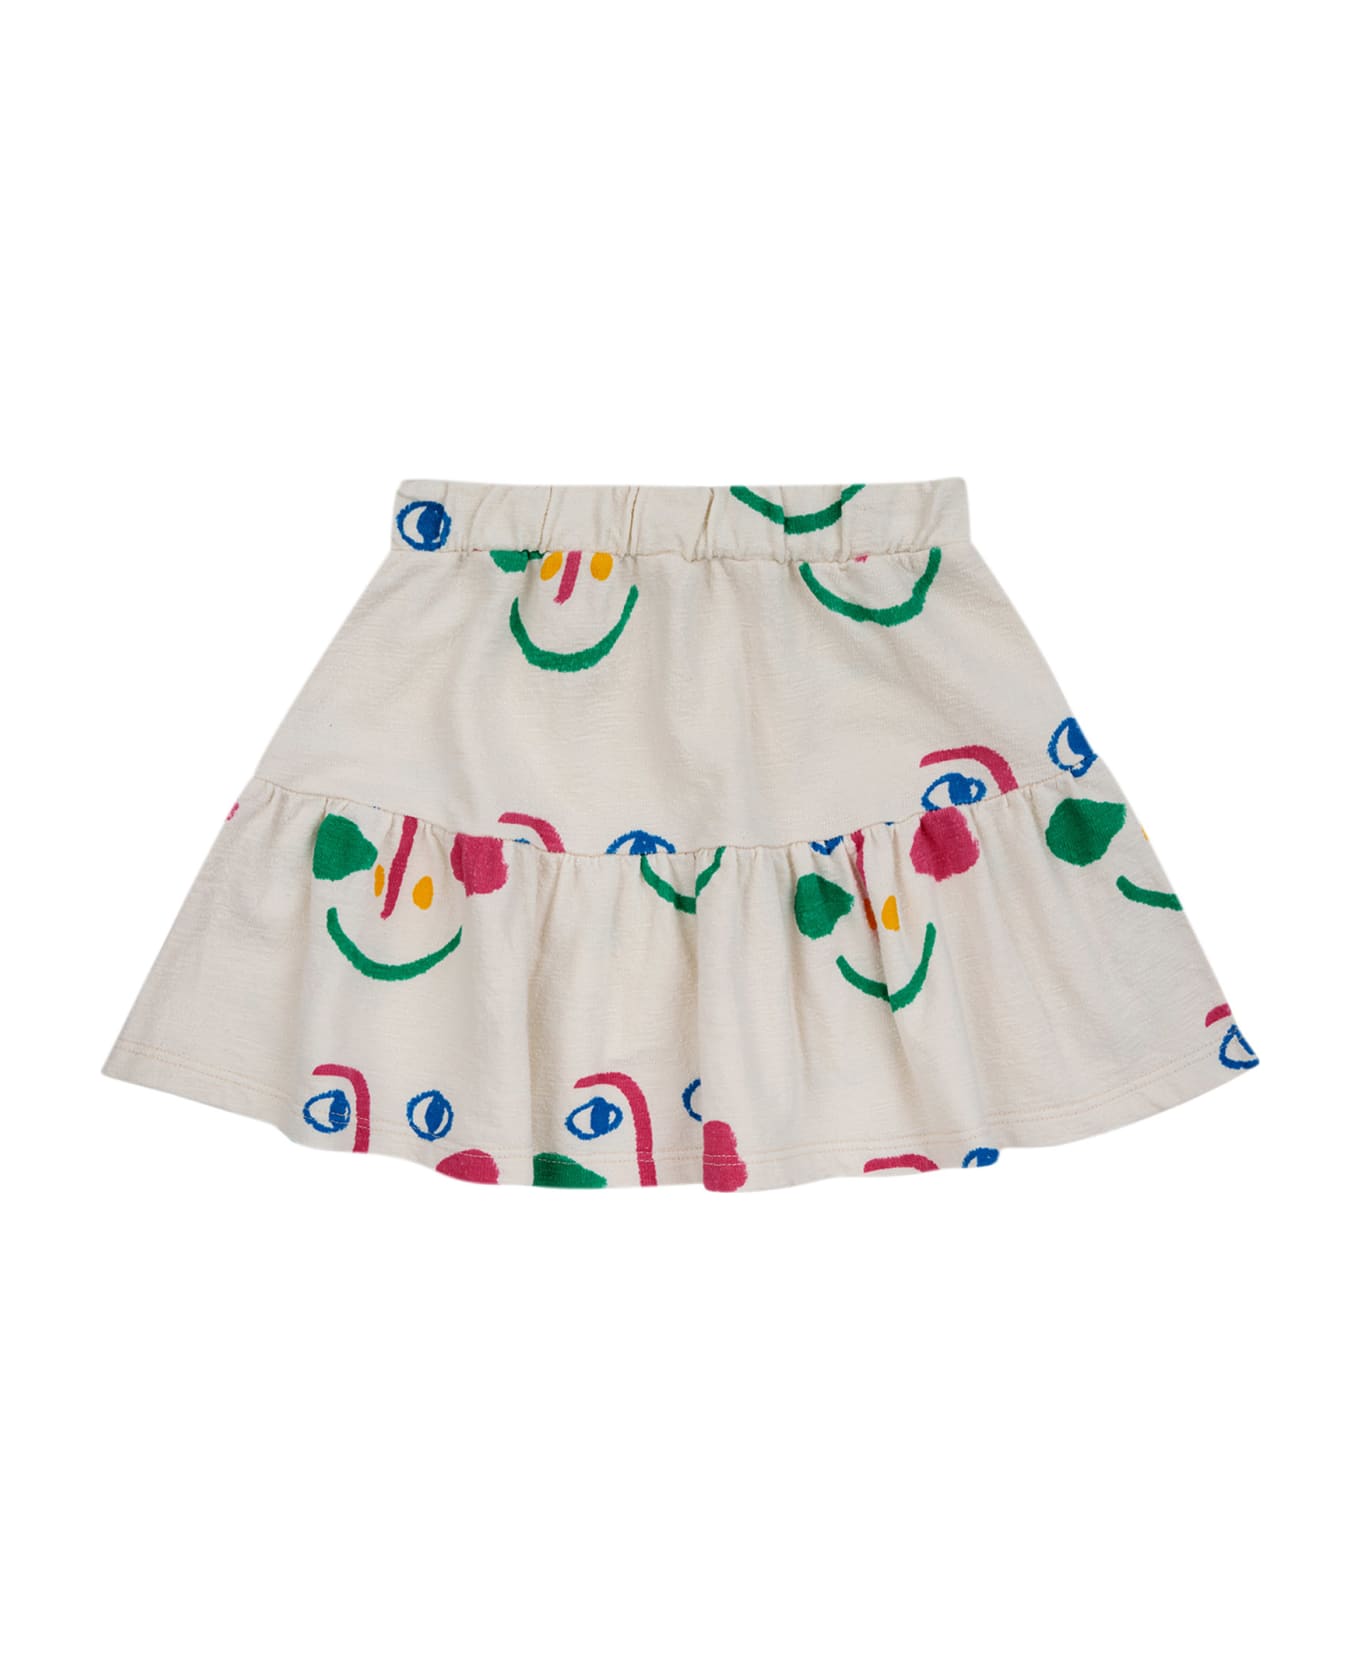 Bobo Choses White Skirt With Print For Girl - White ボトムス